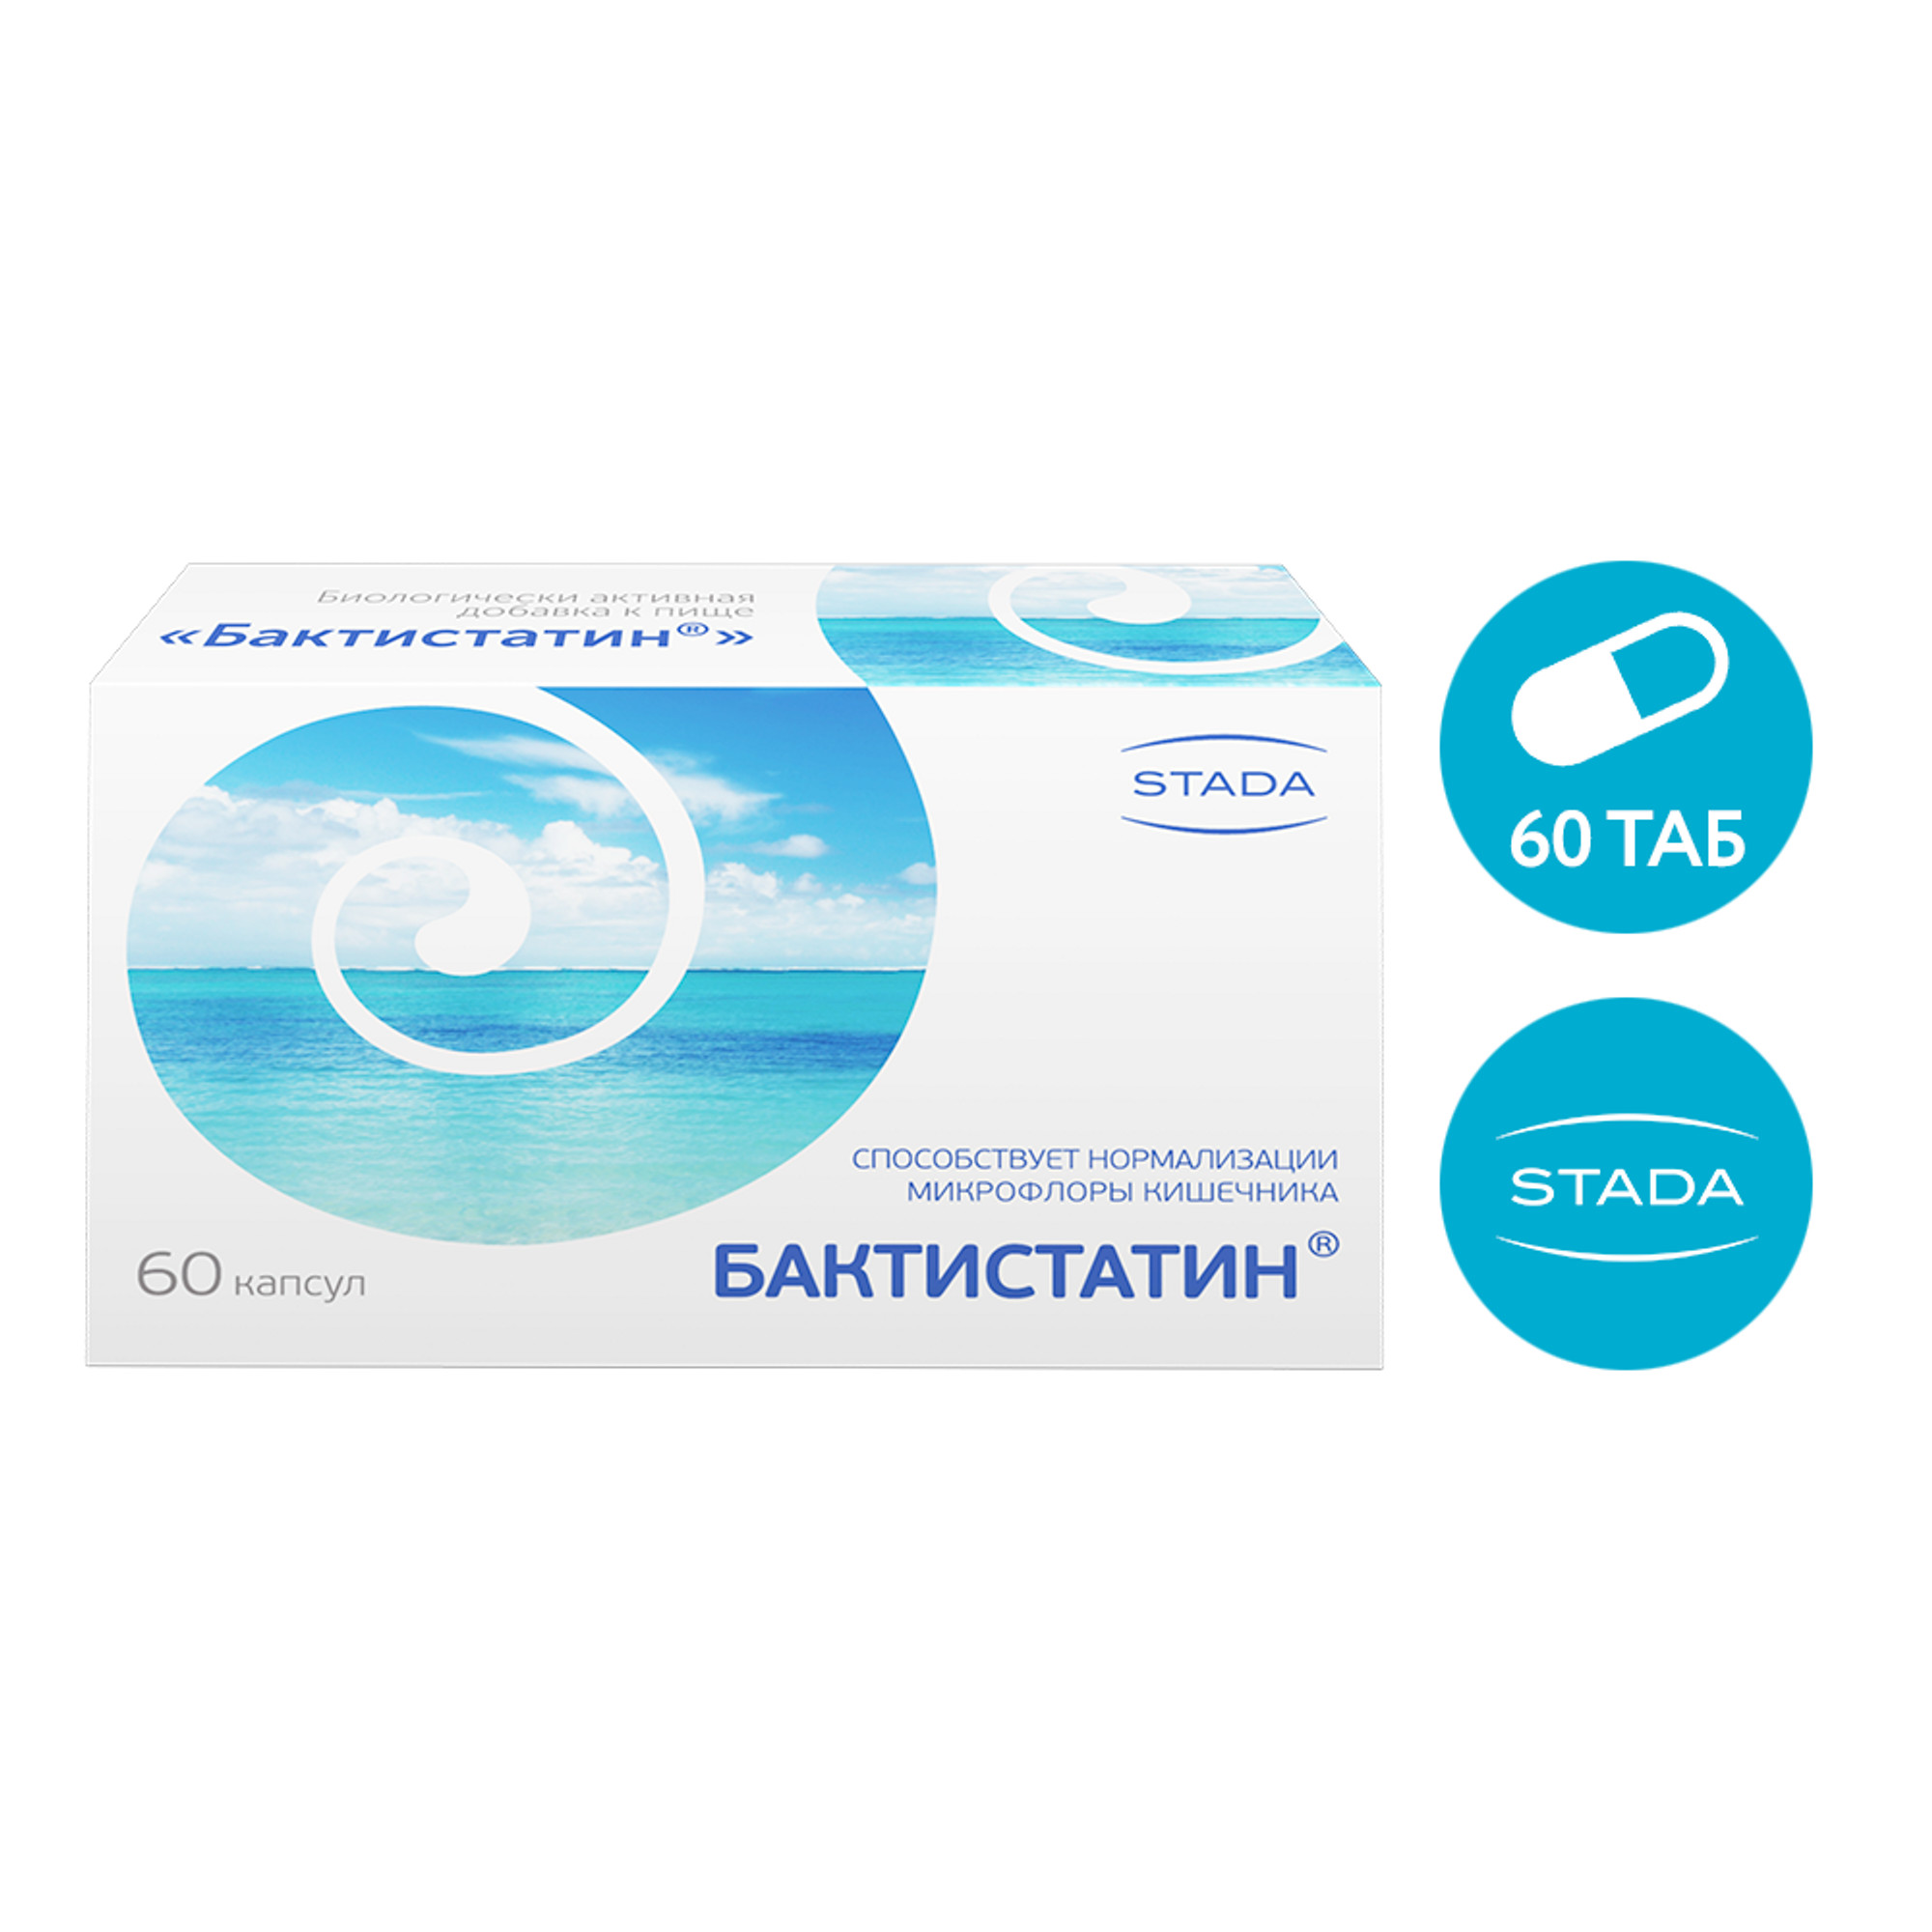 Бактистатин, капсулы 0.5 г, 60 шт. бактистатин капсулы 500 мг 20 шт